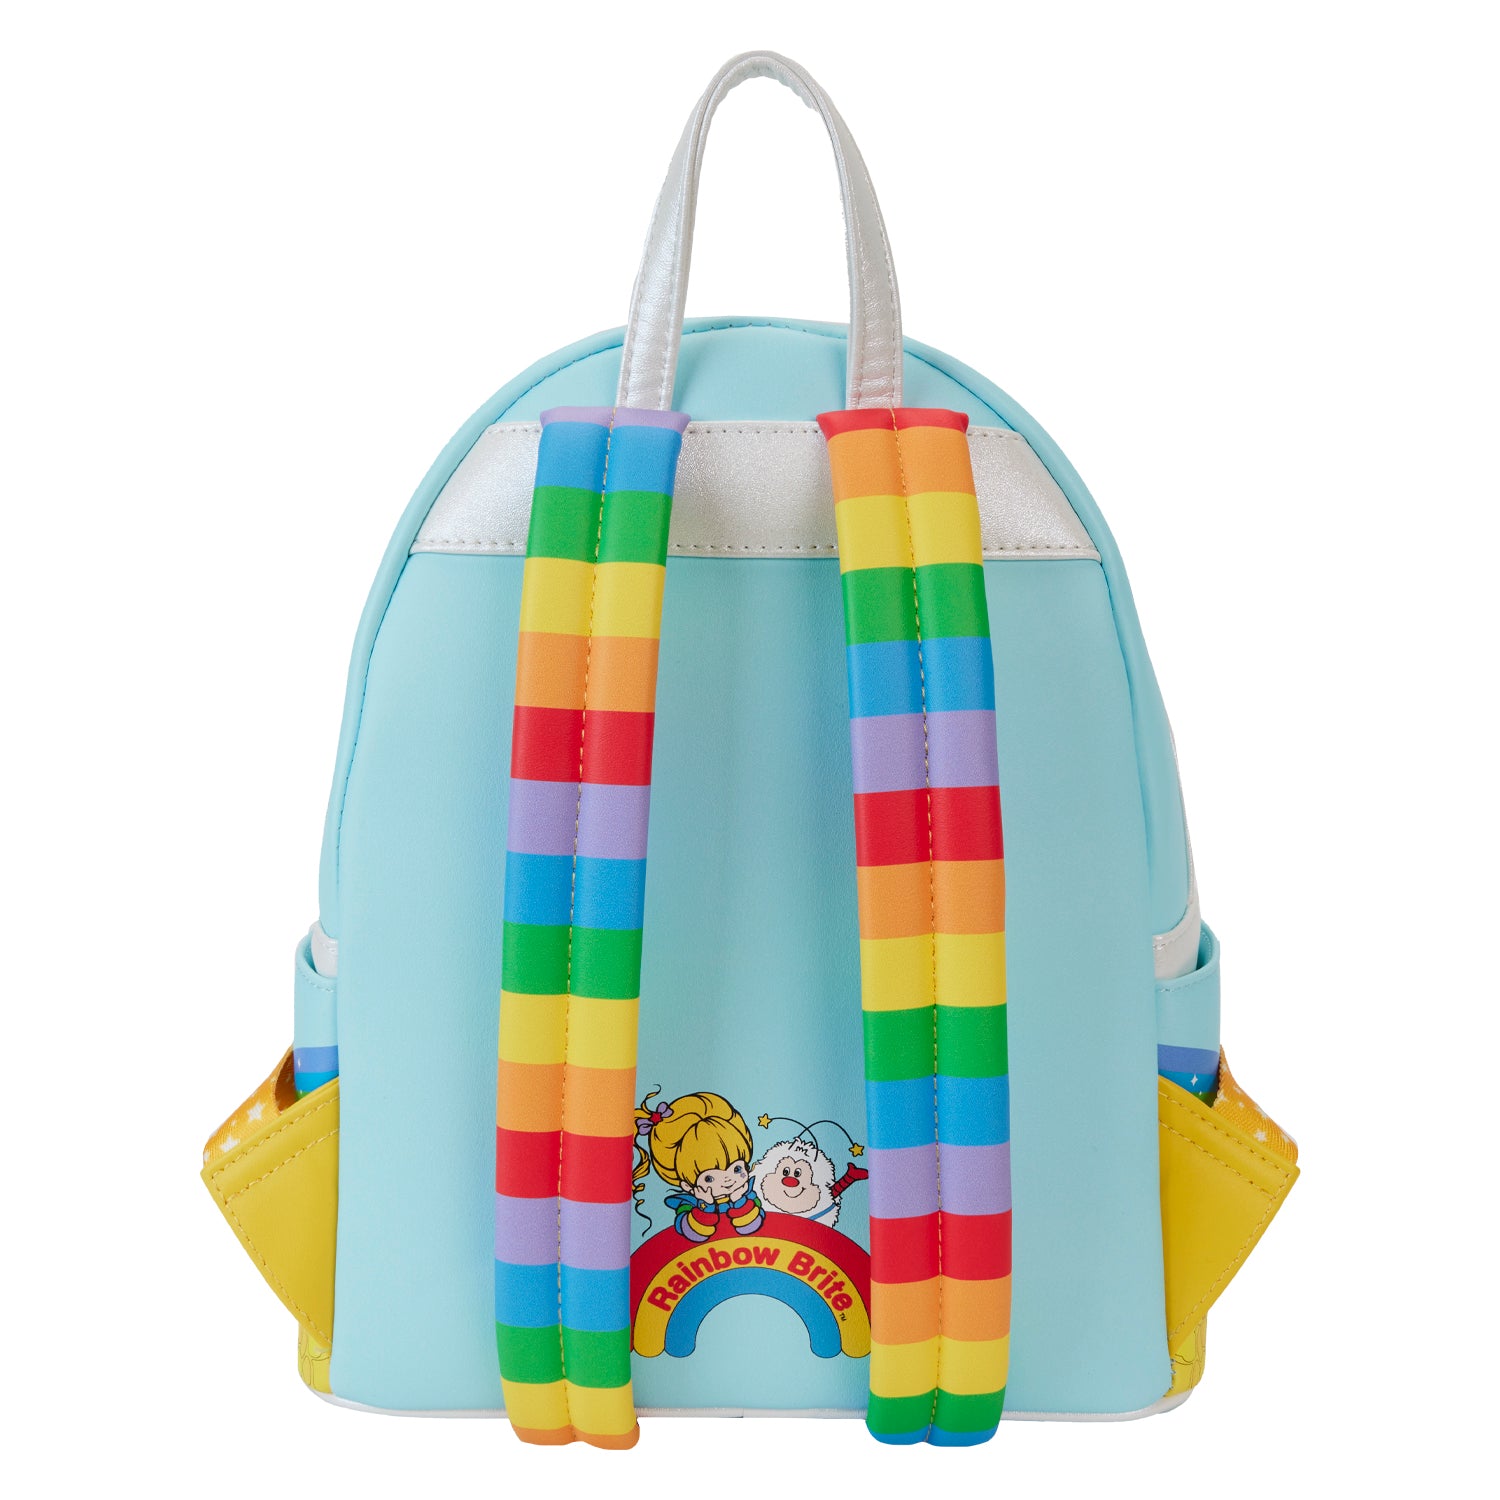 Loungefly x Hallmark Rainbow Brite Castle Group Mini Backpack